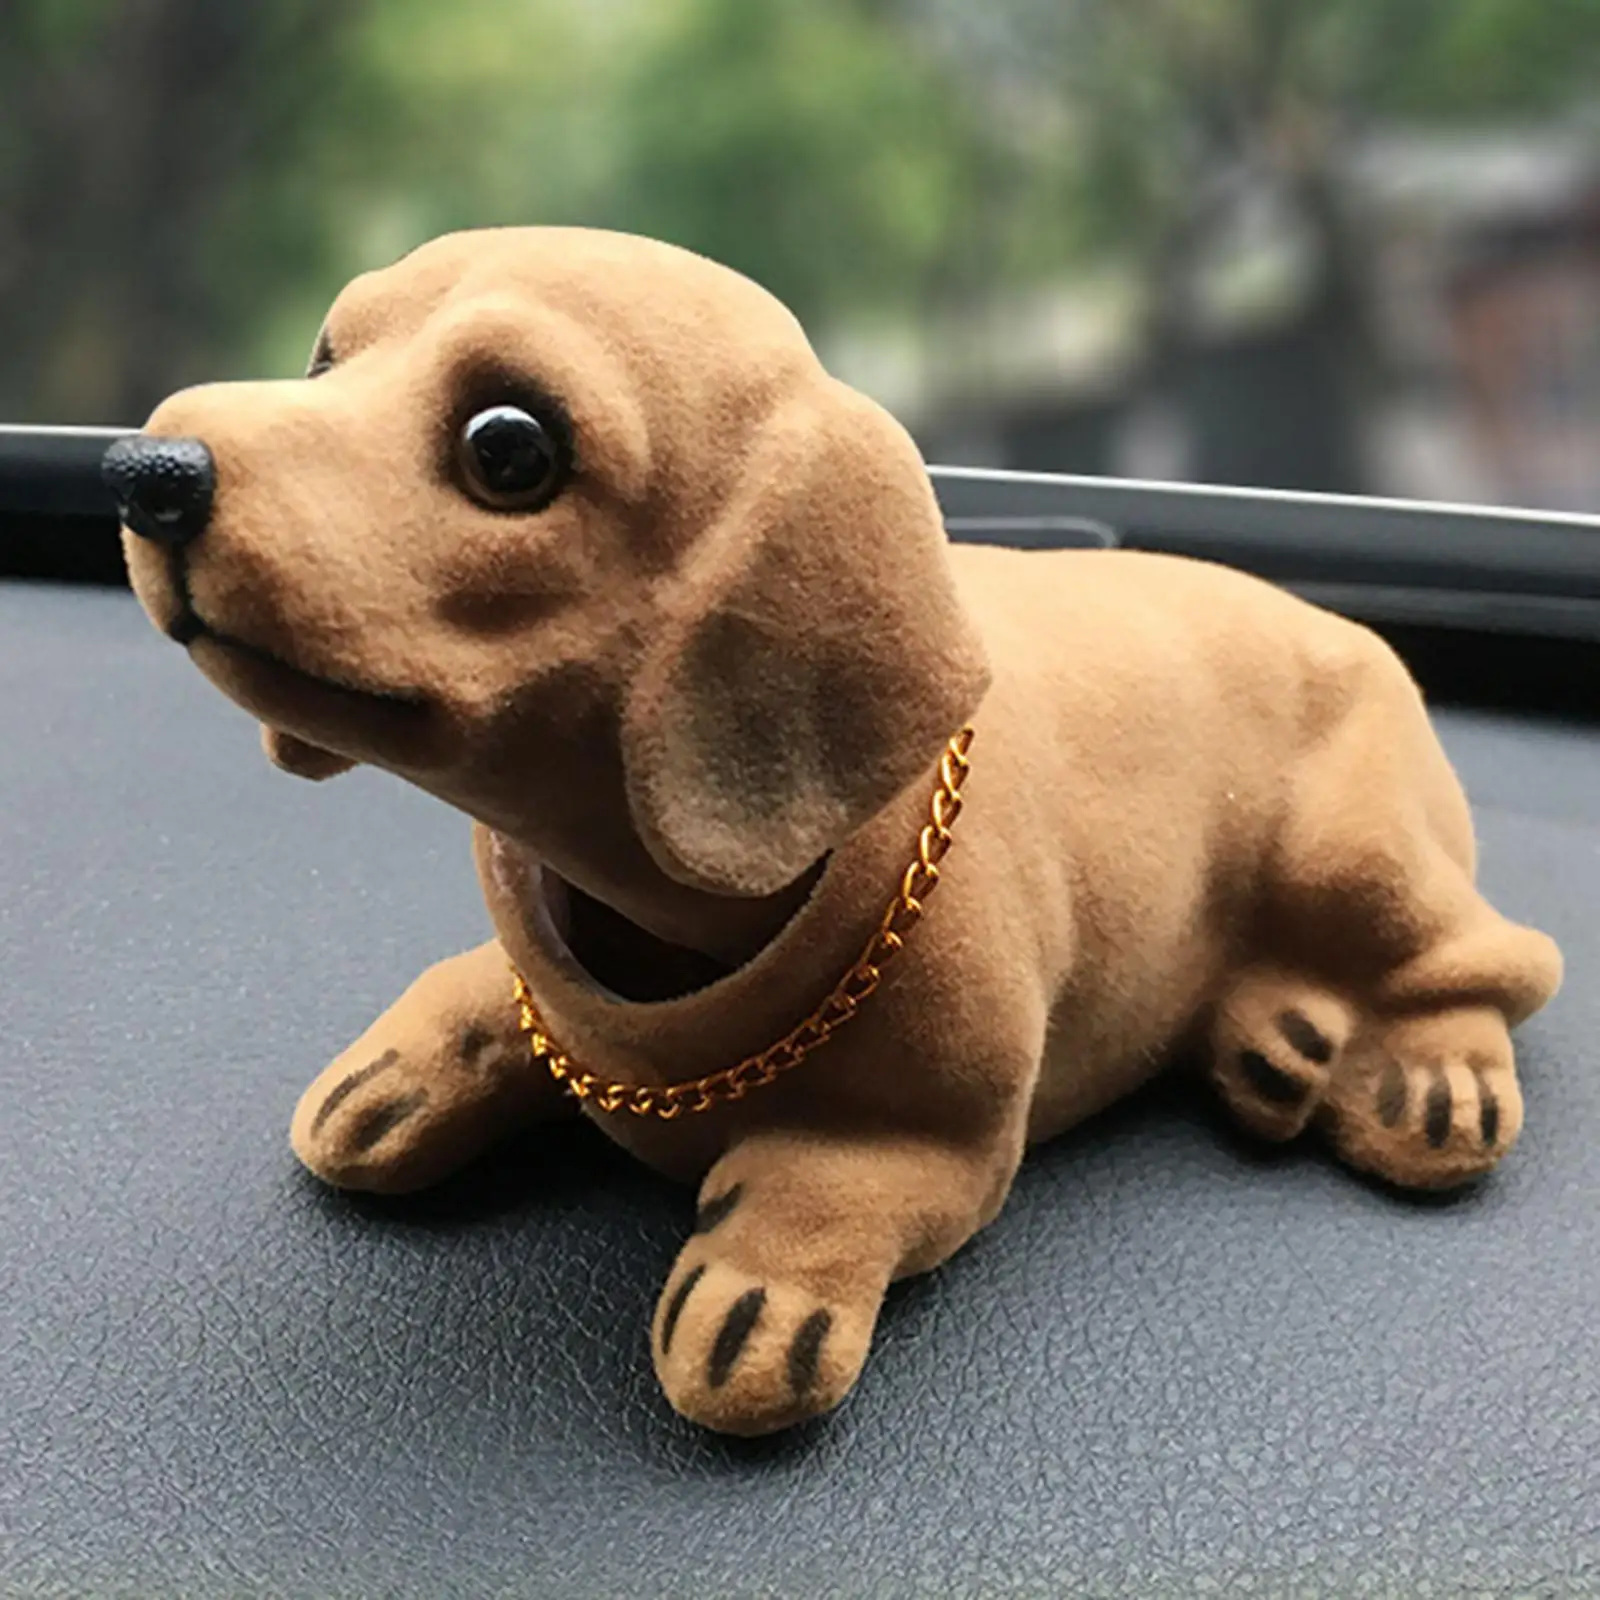 Doll Nodding Dog Shaking Head Dog Resin Car Ornaments Puppy Cute Dog Toy  Figure Statue for Car Dashboard Tabletop Decoration